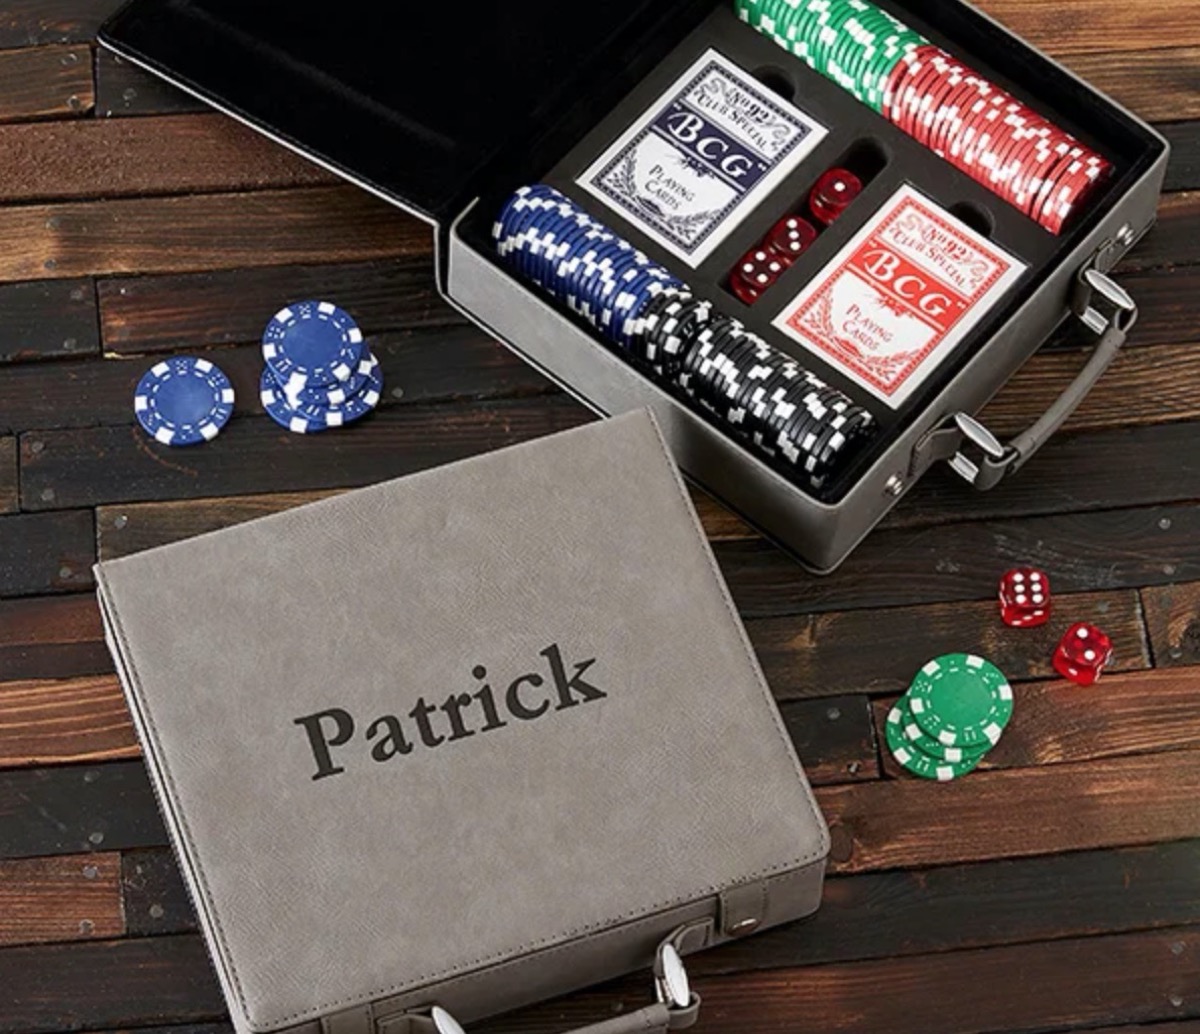 personalized poker set